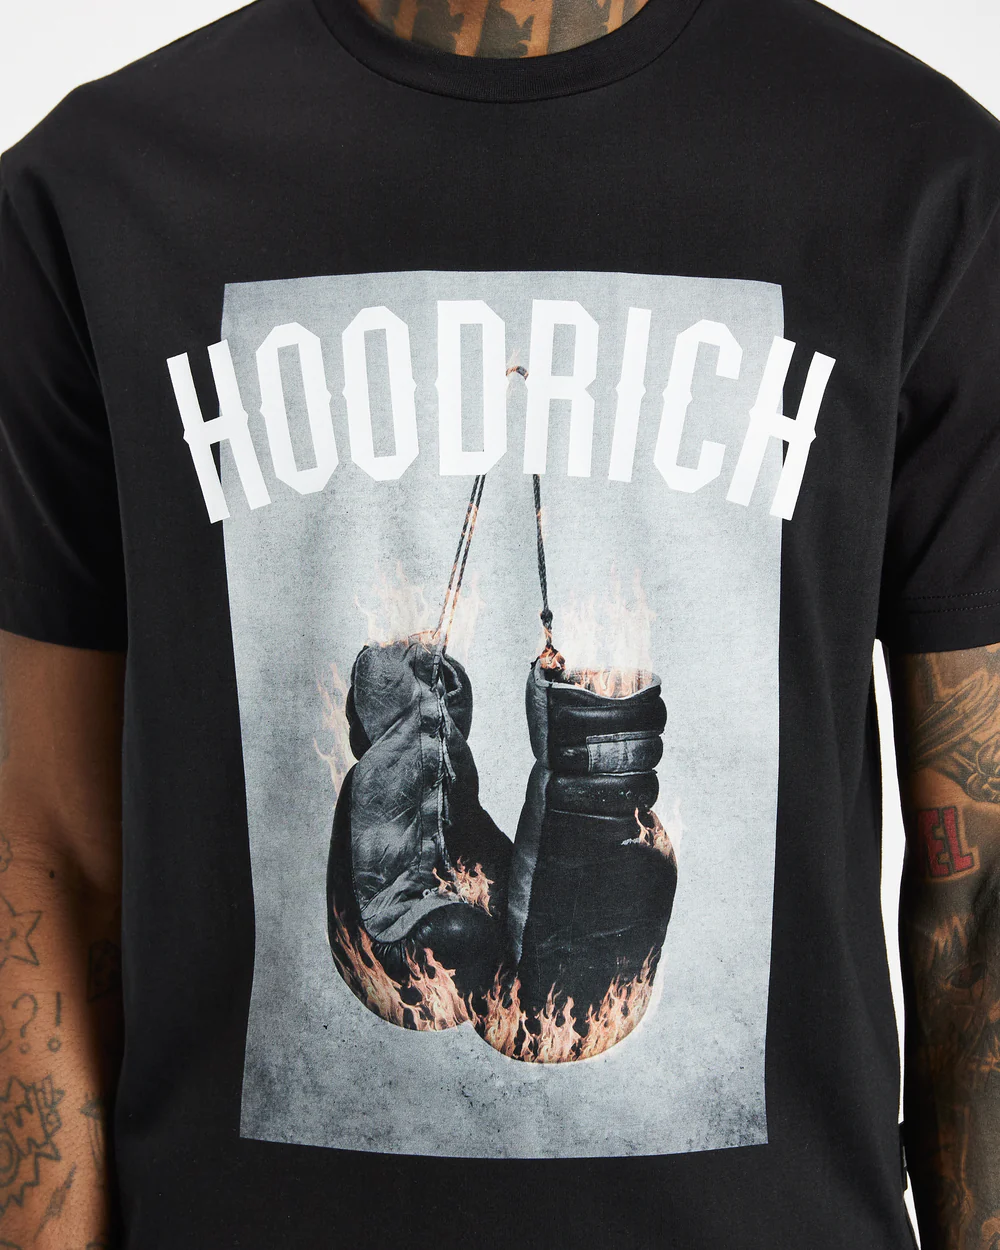 Hoodrich OG Fighter T-Shirt Black - Urban Menswear